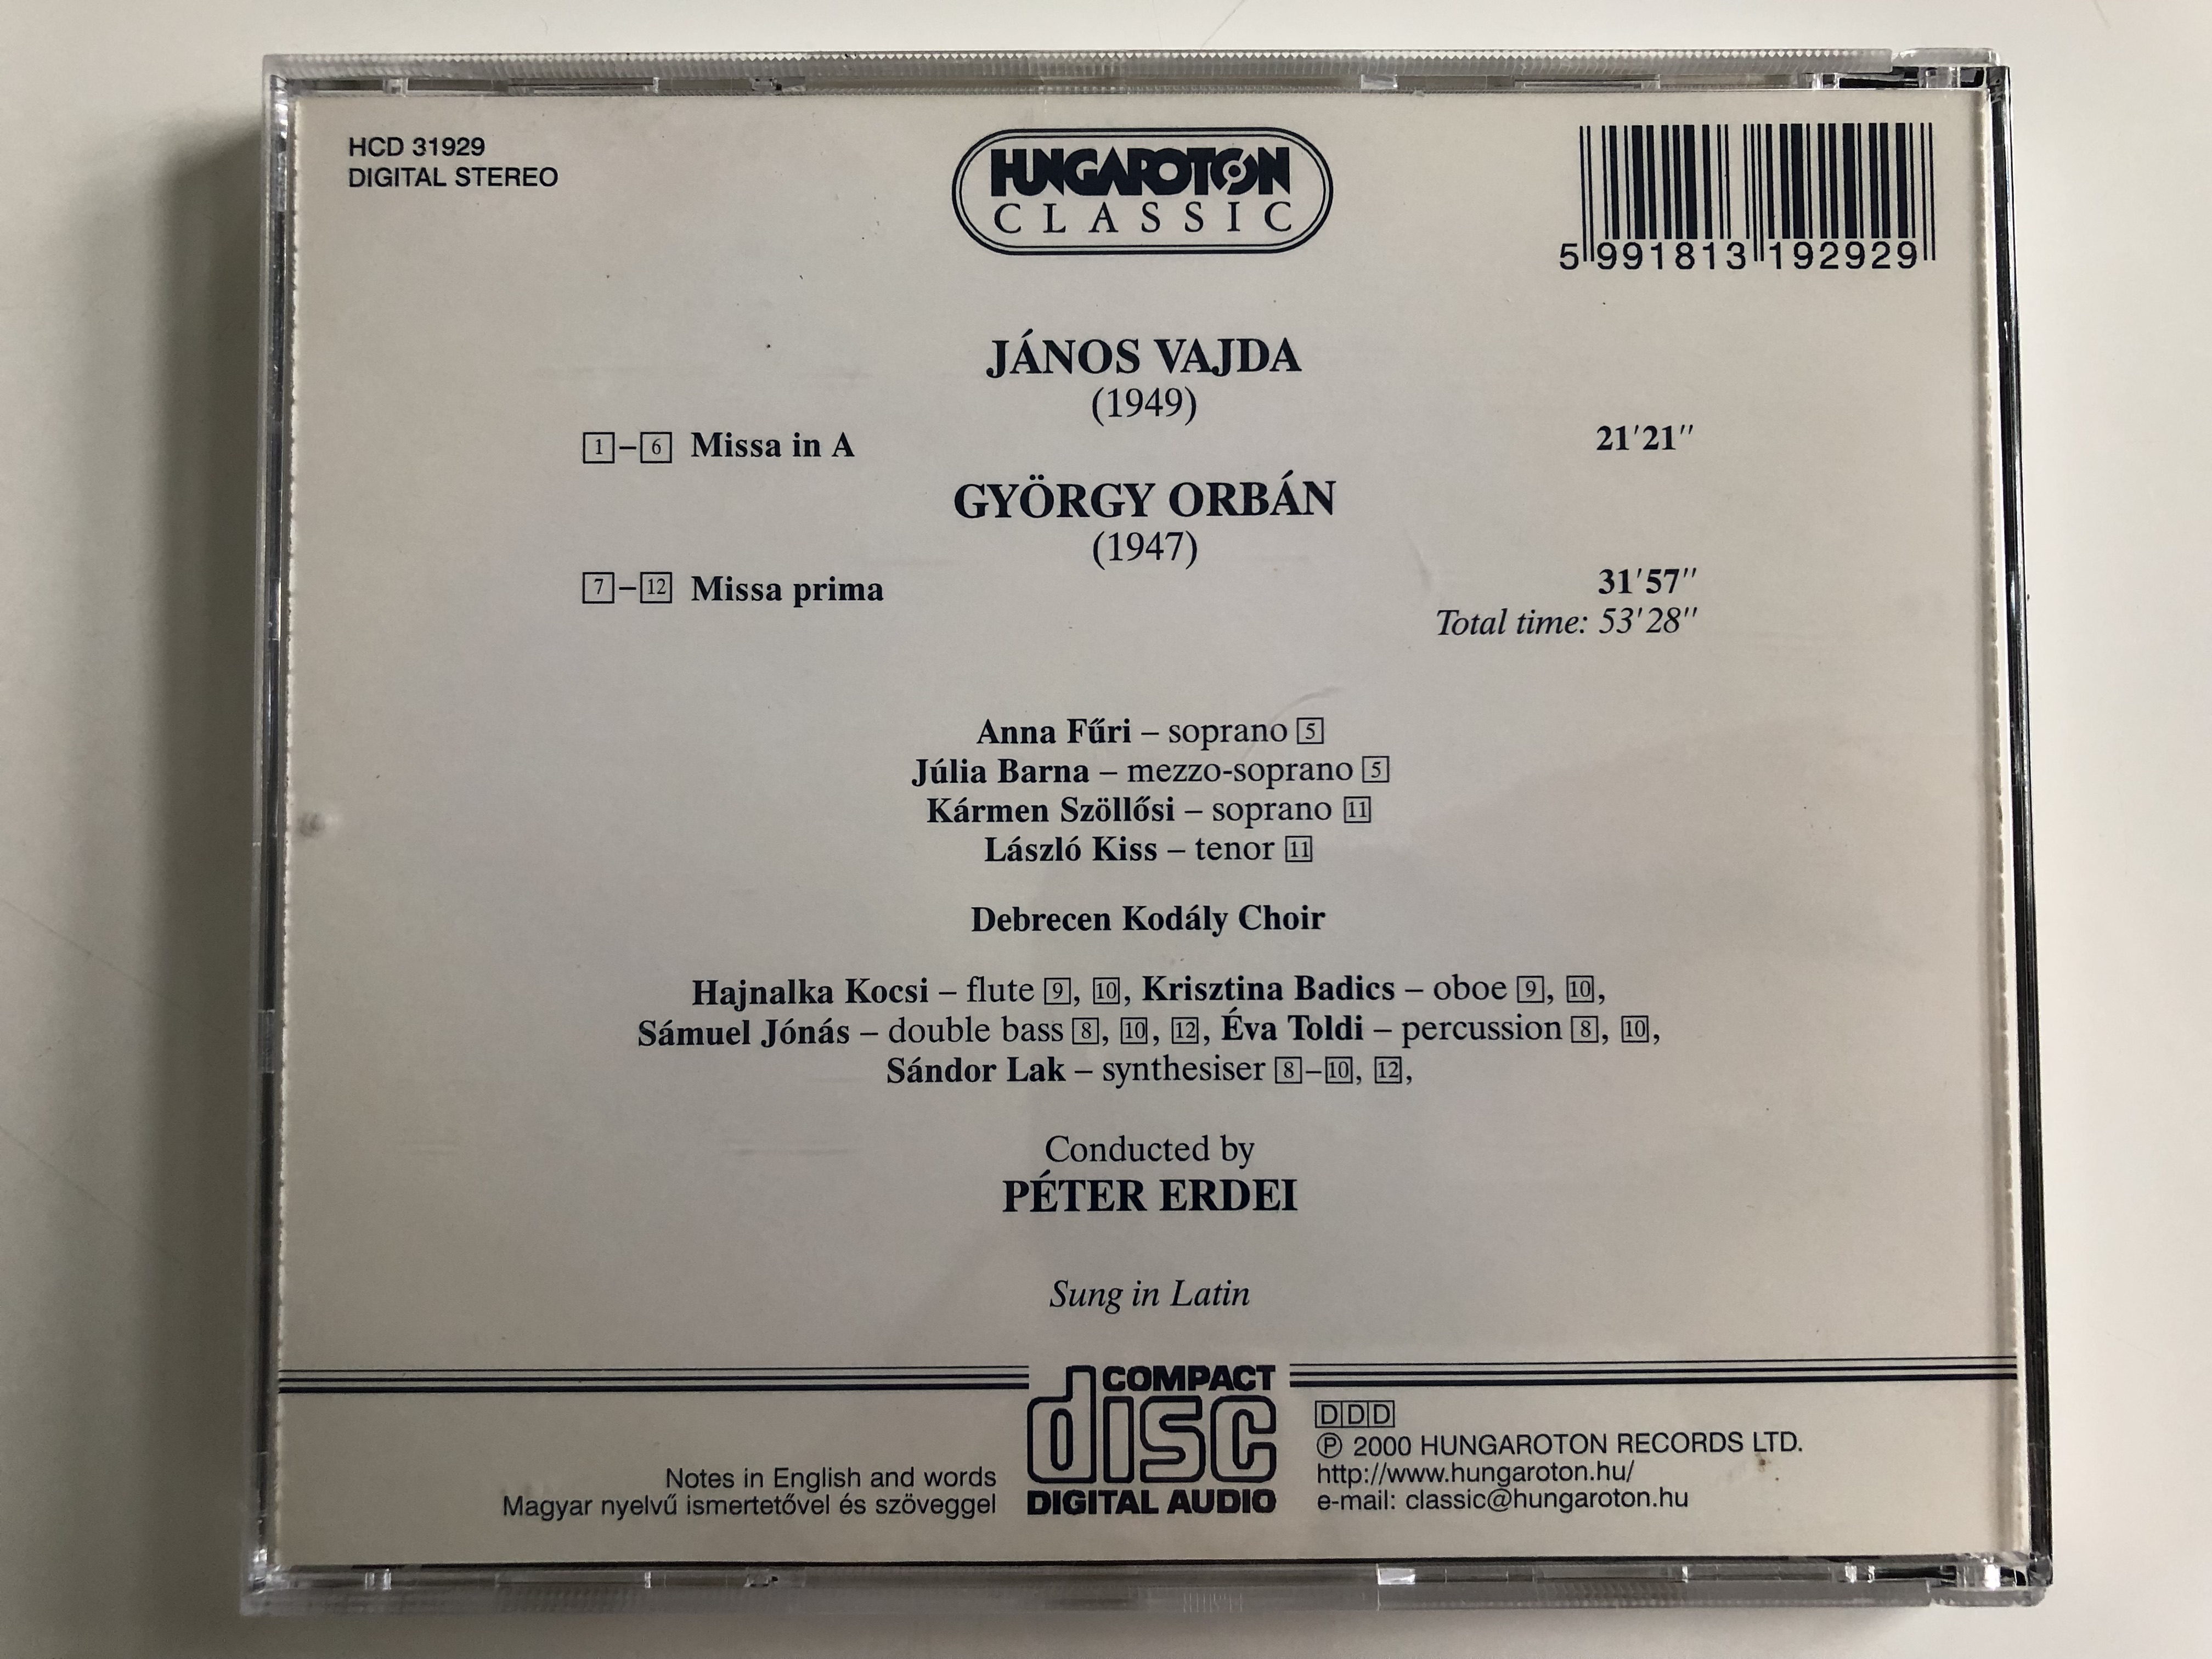 janos-vajda-missa-in-a-gyorgy-orban-missa-prima-debrecen-kodaly-choir-conducted-peter-erdei-hungaroton-audio-cd-2000-stereo-hcd-31929-11-.jpg